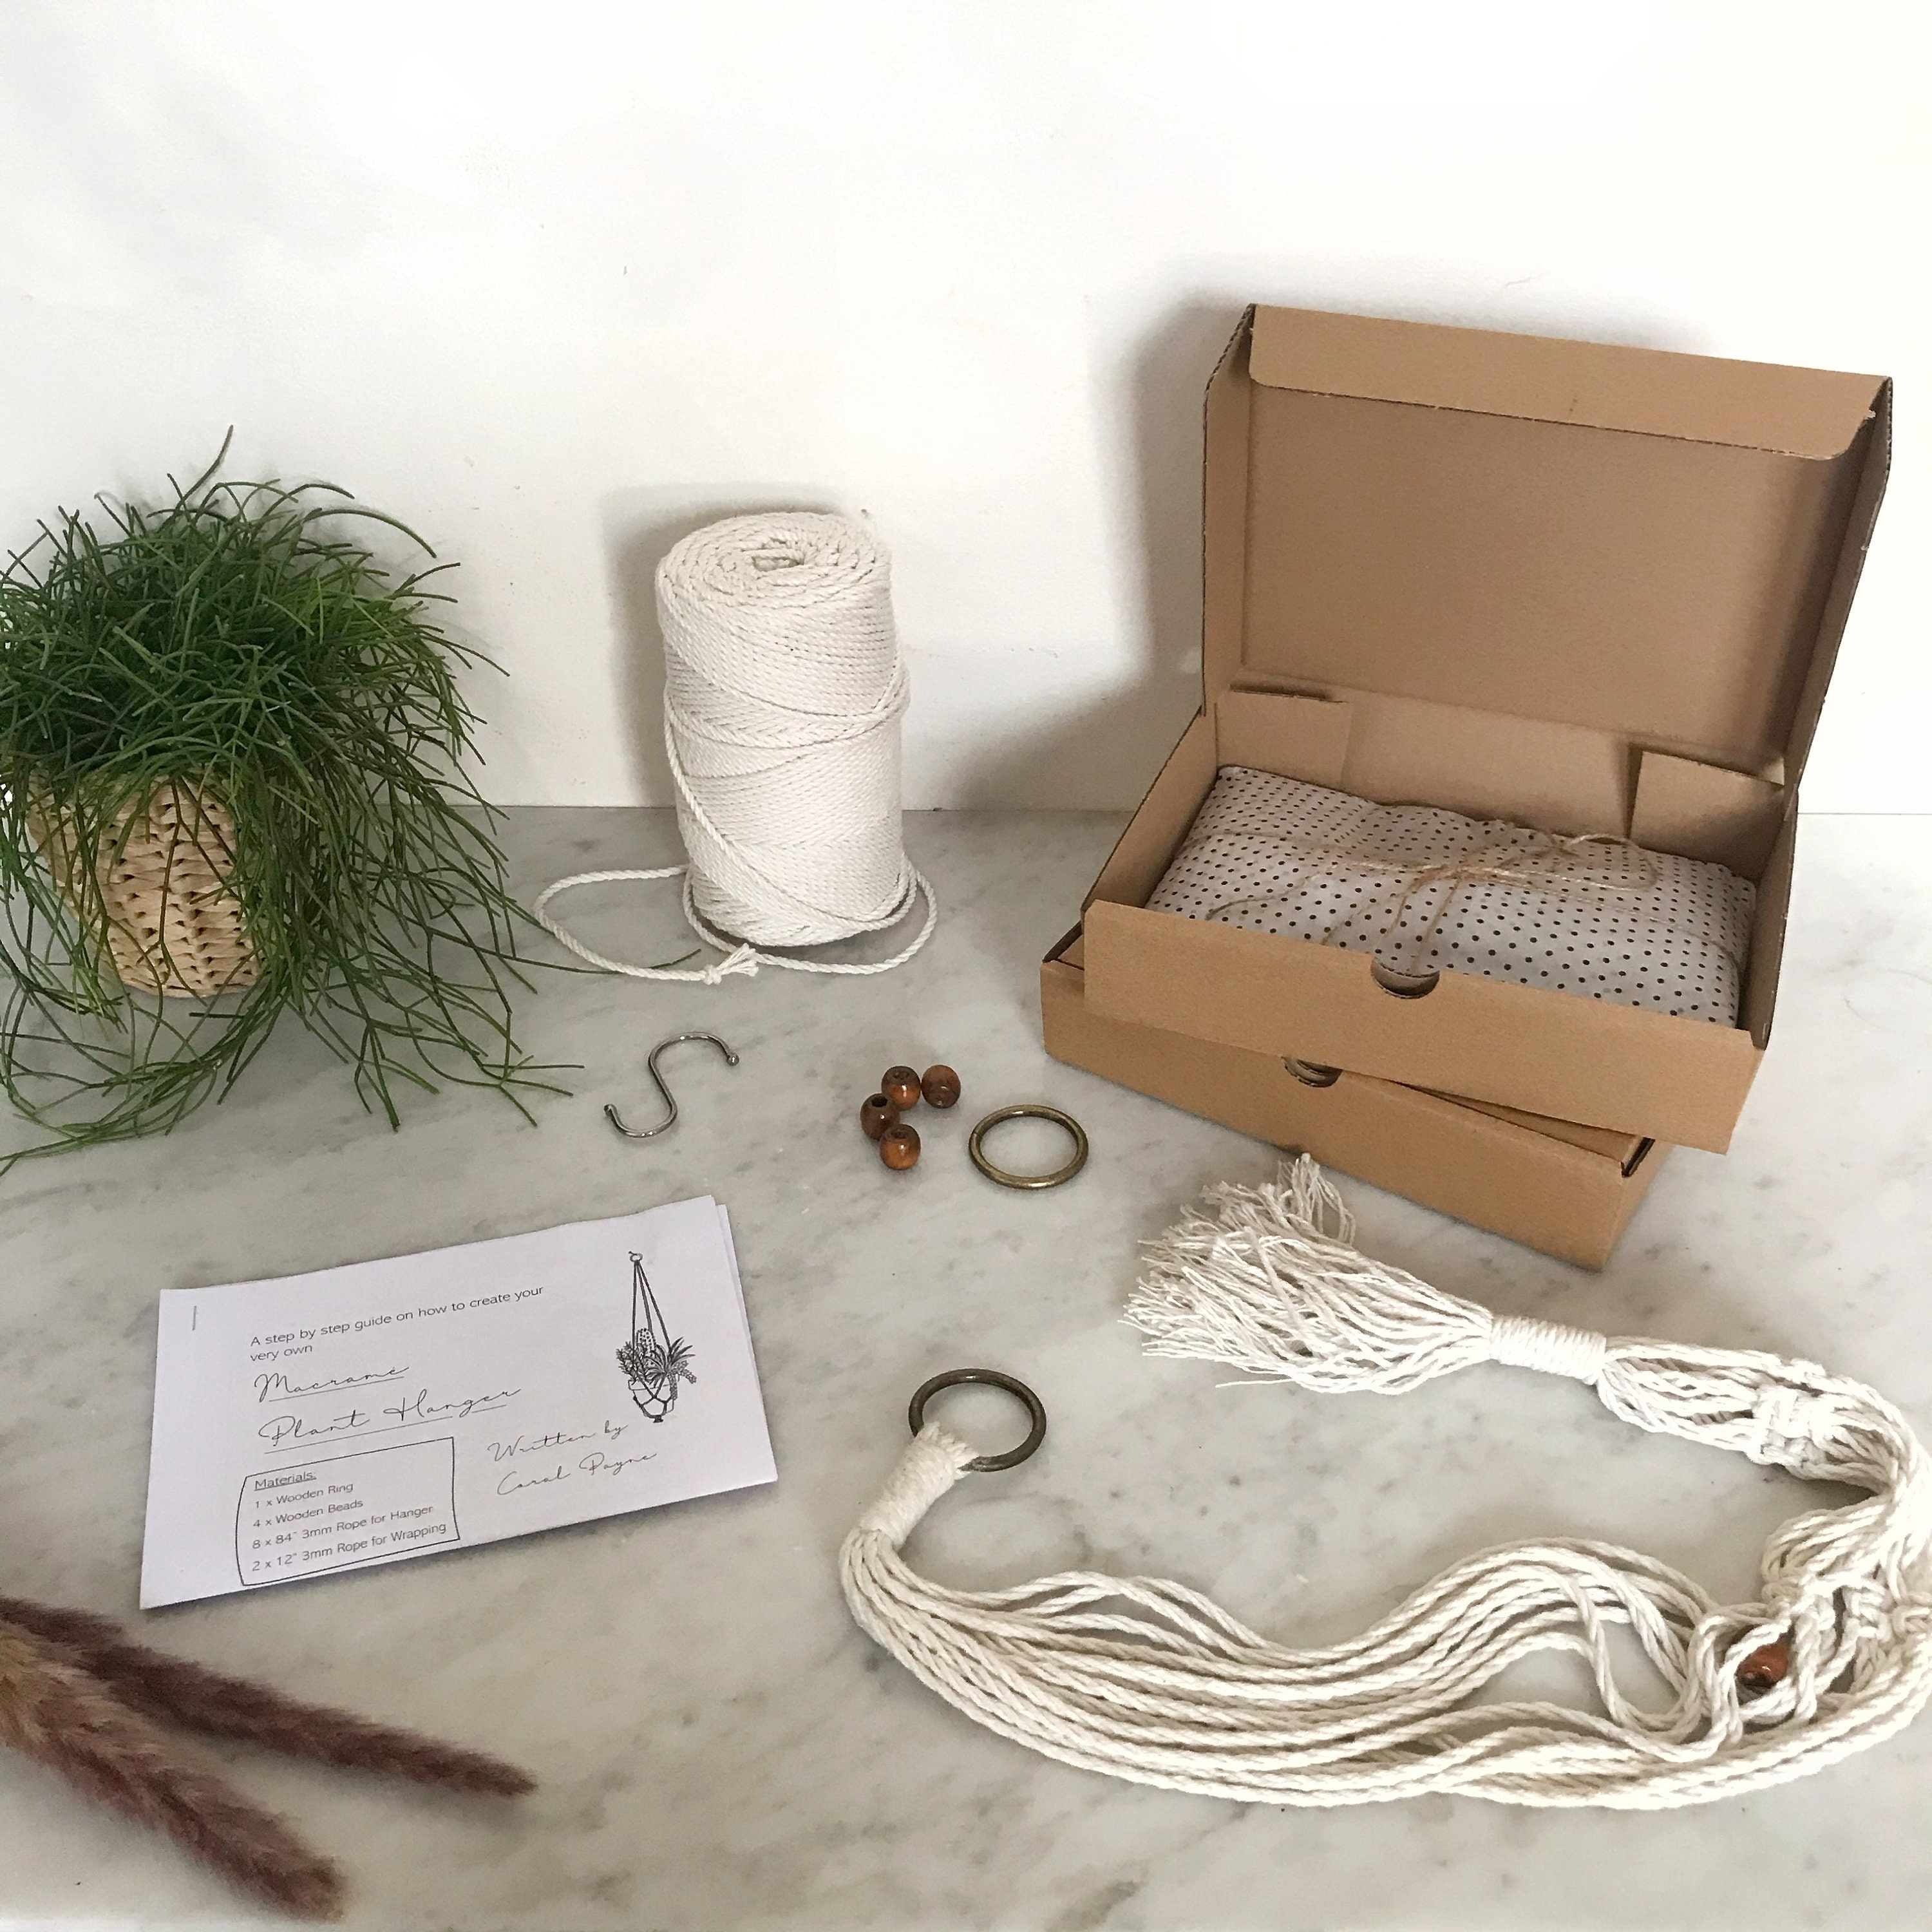 Macrame Plant Hanger Kit - Make Your Own Diy Knotted Plant Holder